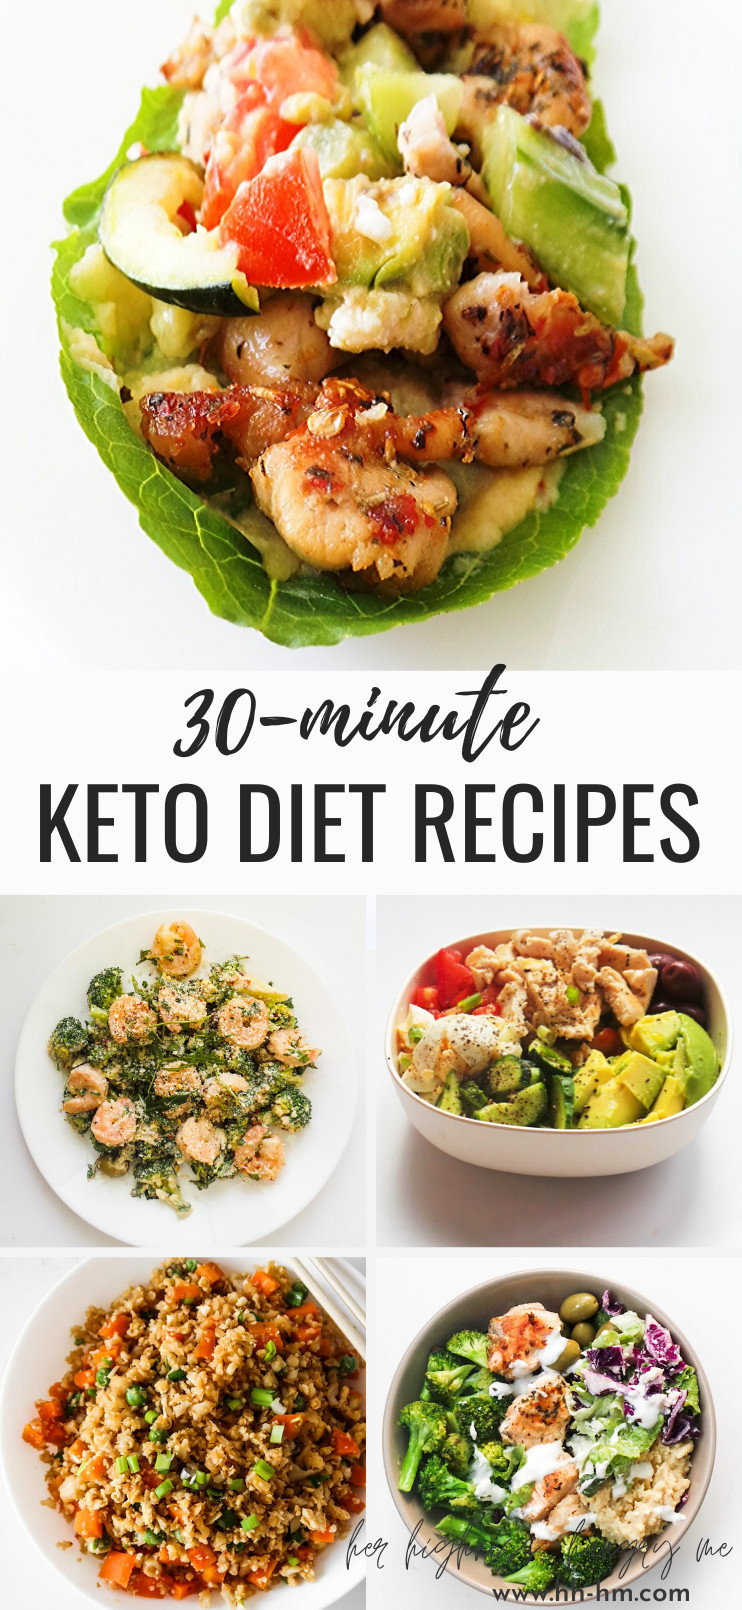 Healthy Keto Dinner Recipes For Two
 13 Easy Keto Dinner Recipes For Beginners Her Highness